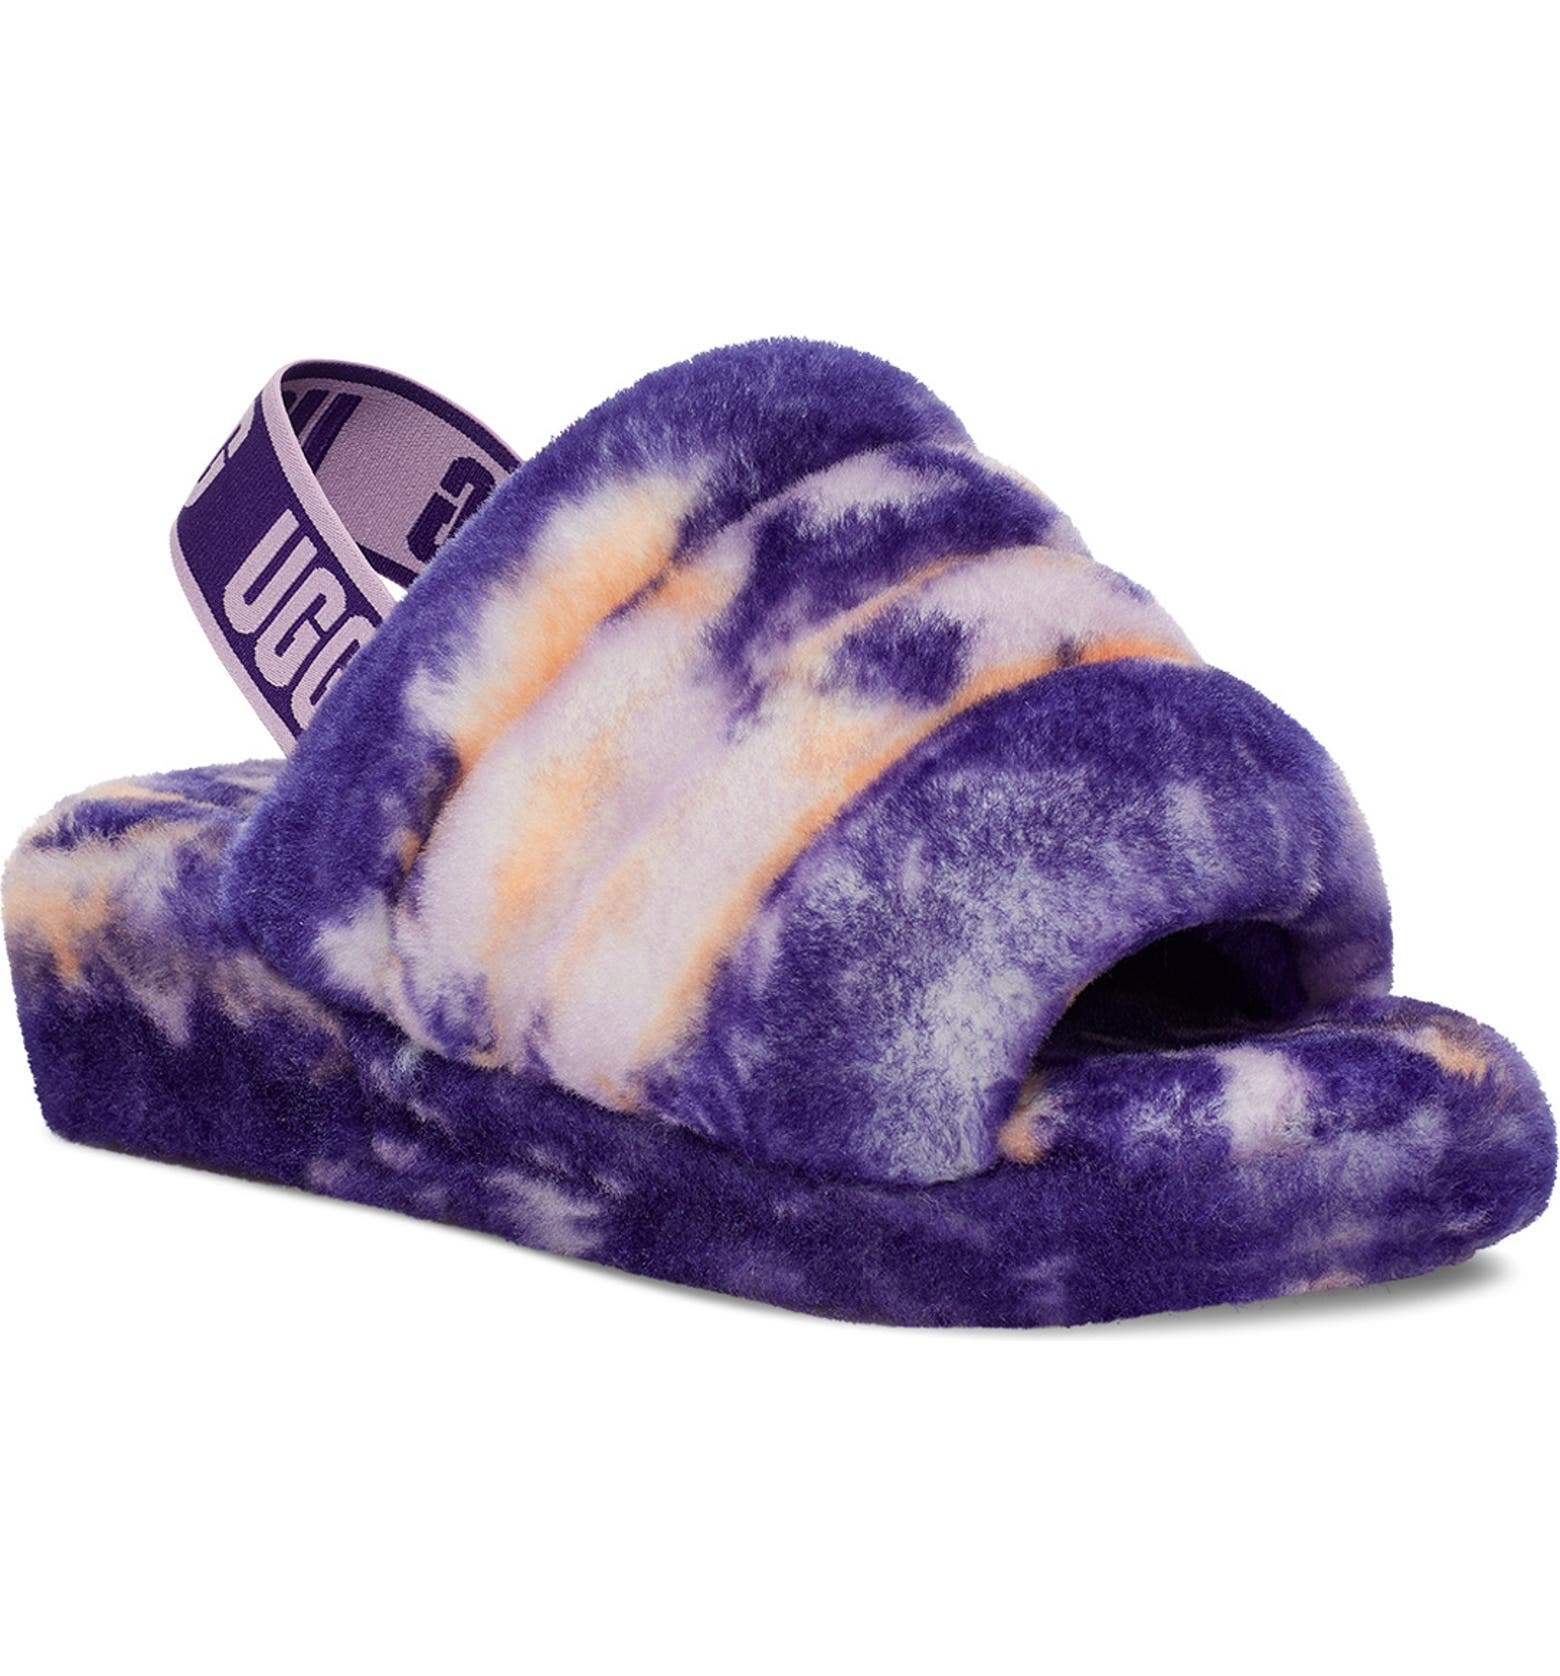 tied dye print fuzz slippers